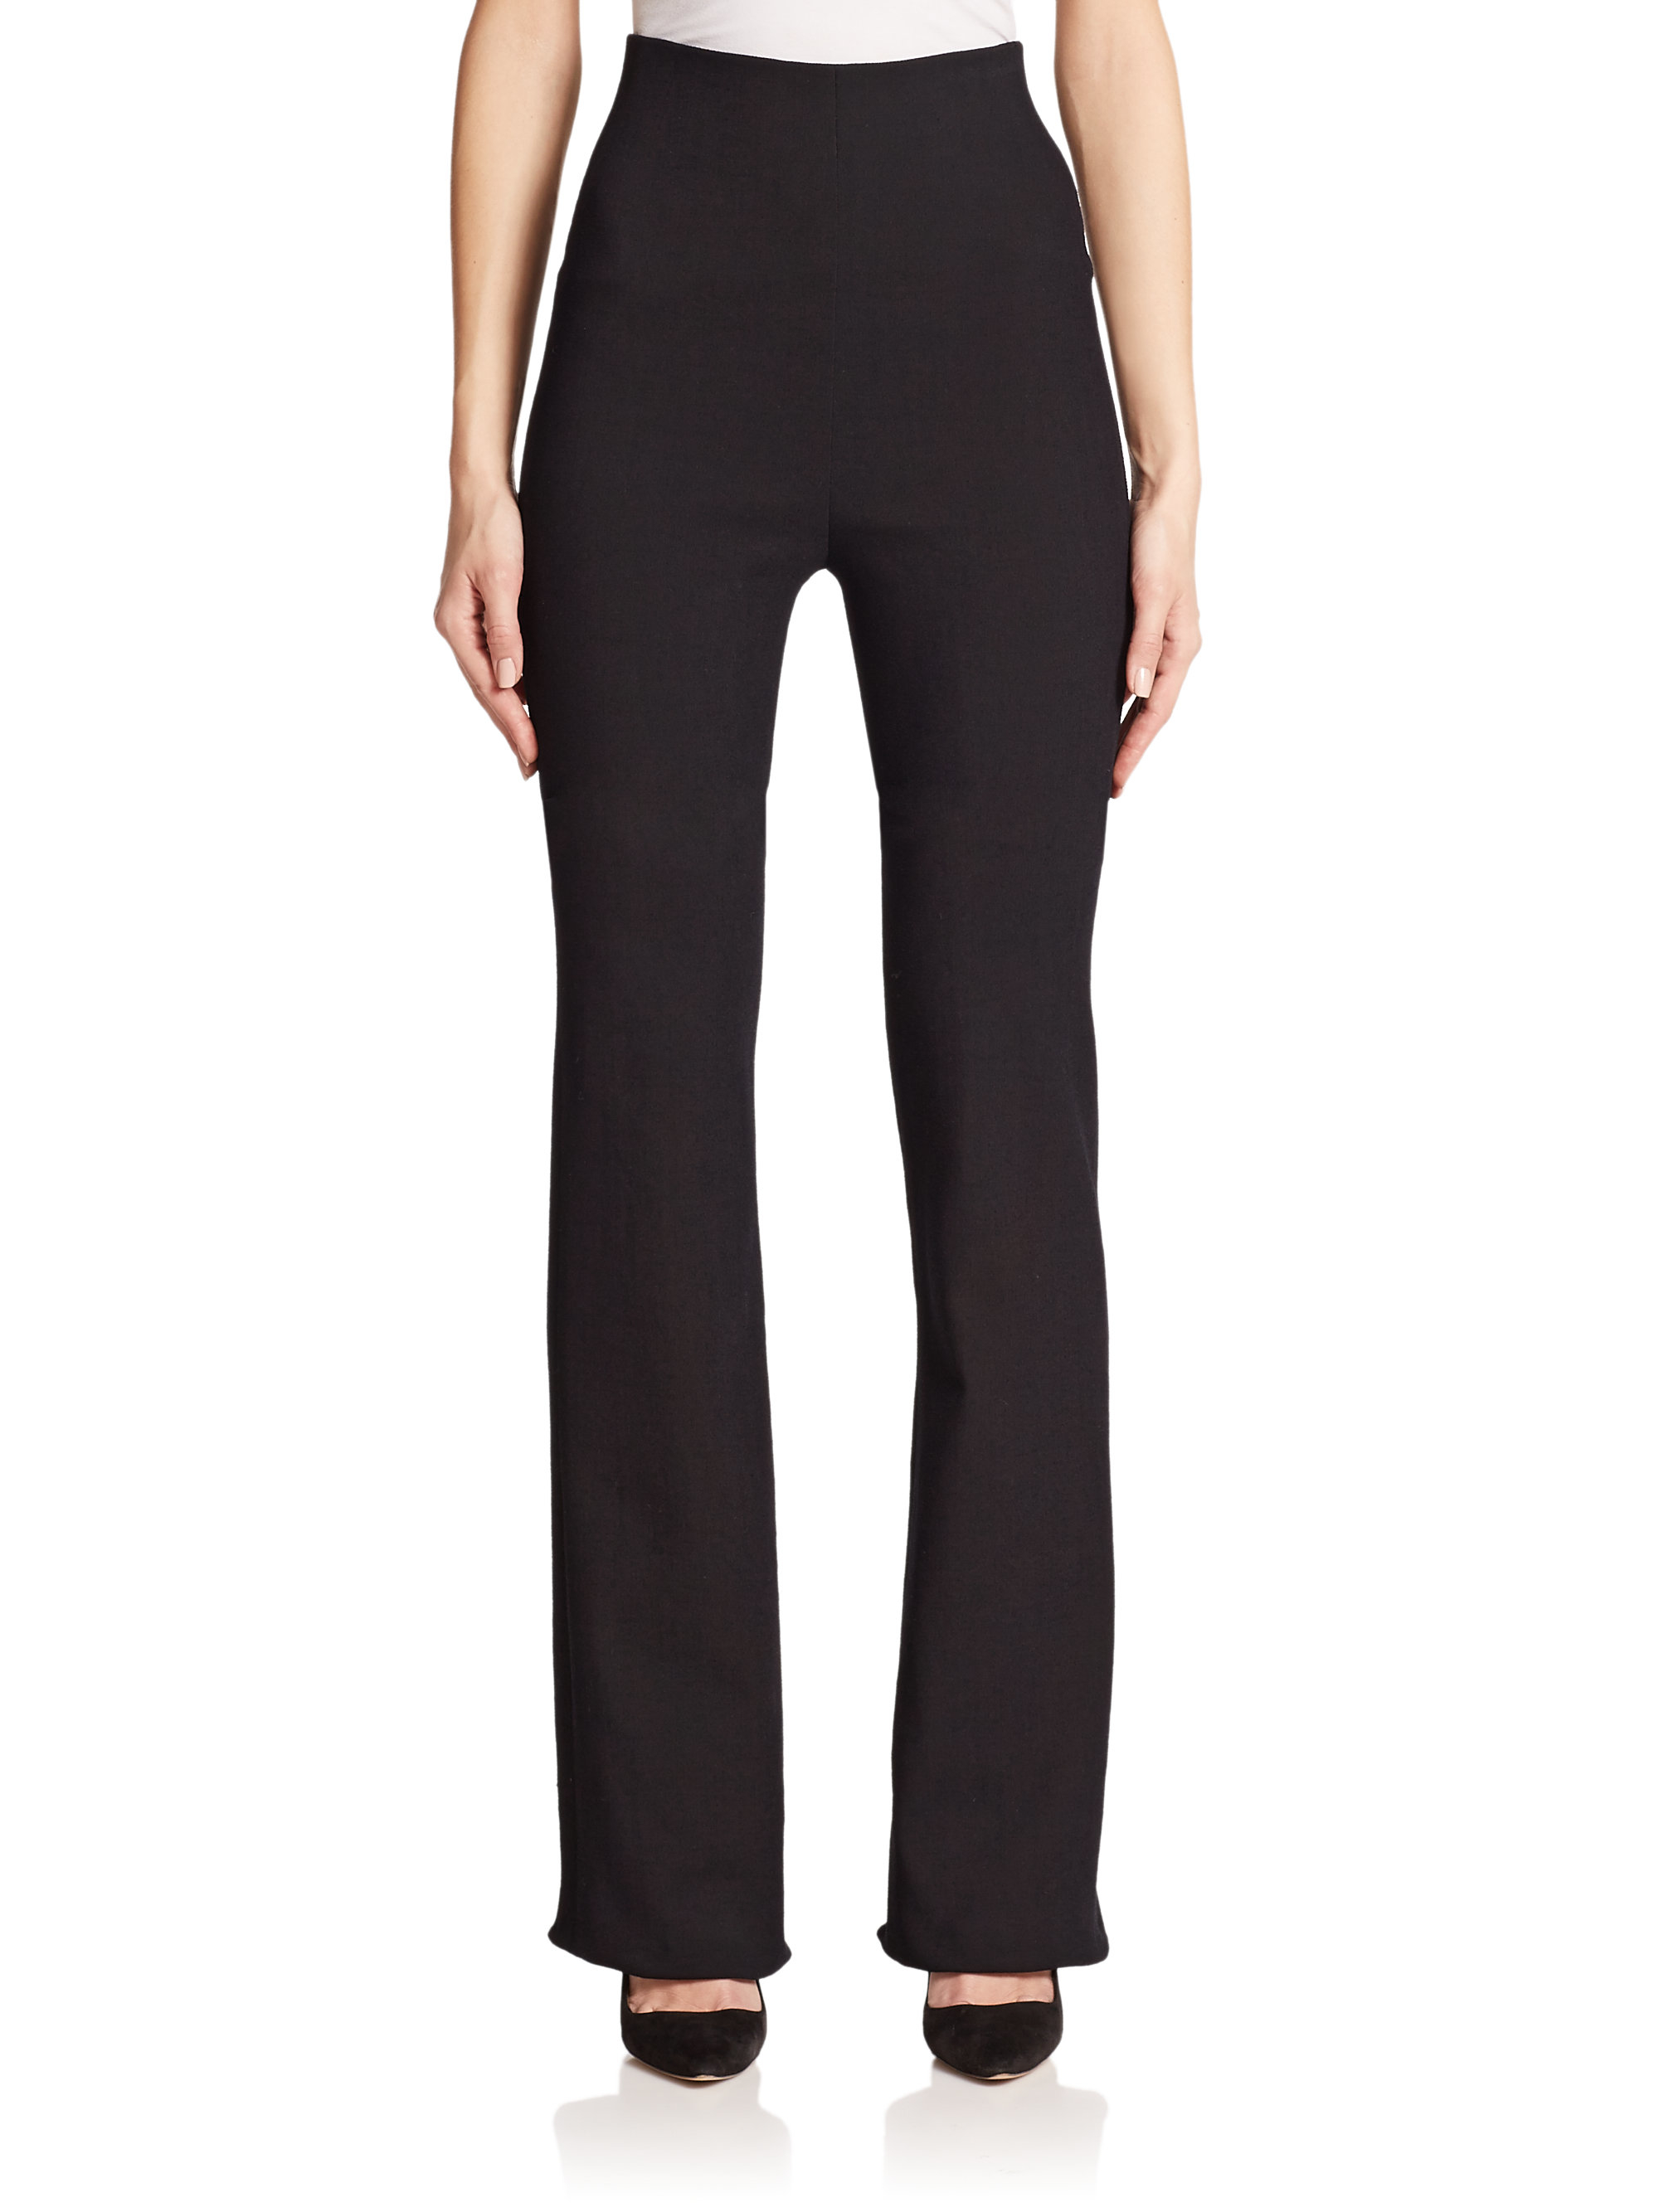 Lyst - Donna Karan High-waist Pants in Black